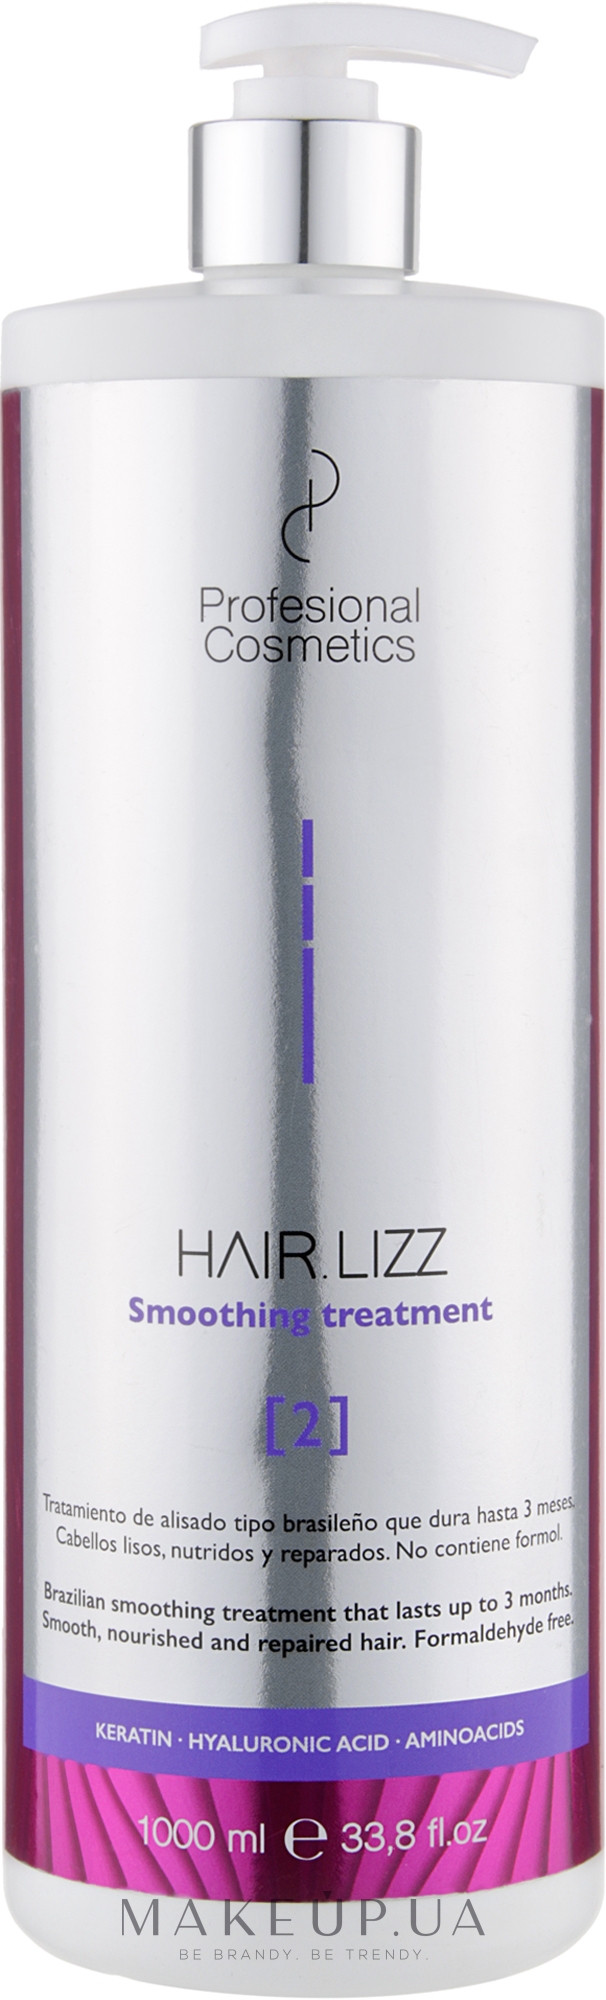 Выравнивающий препарат для волос - Profesional Cosmetics HAIR.LIZZ Smoothing Treatment — фото 1000ml